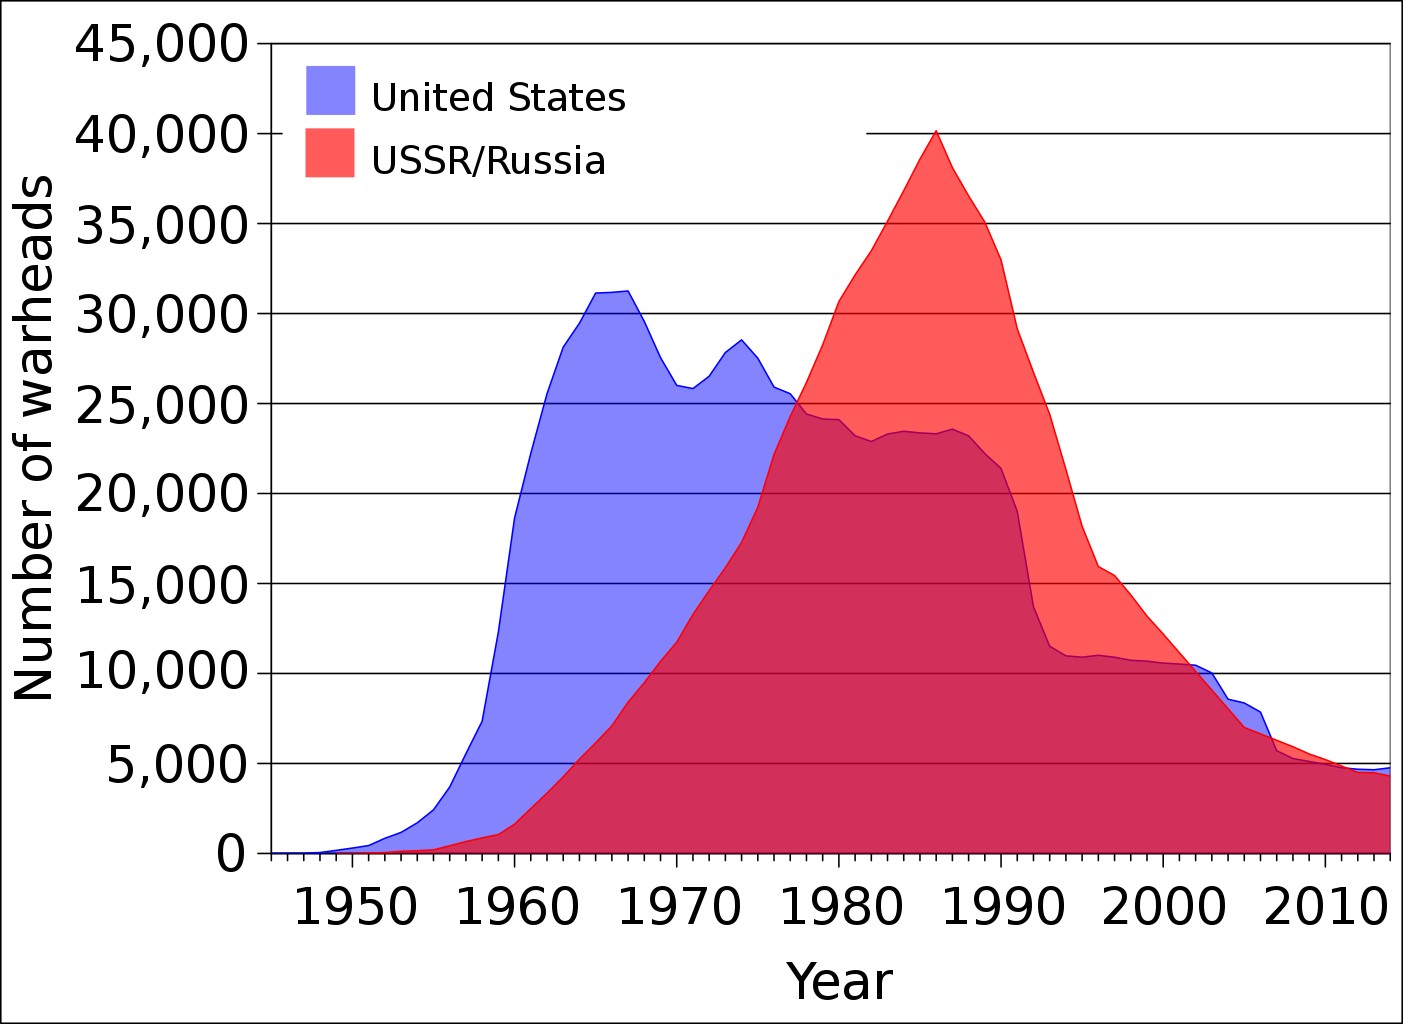 US and USSR nuclear stockpiles